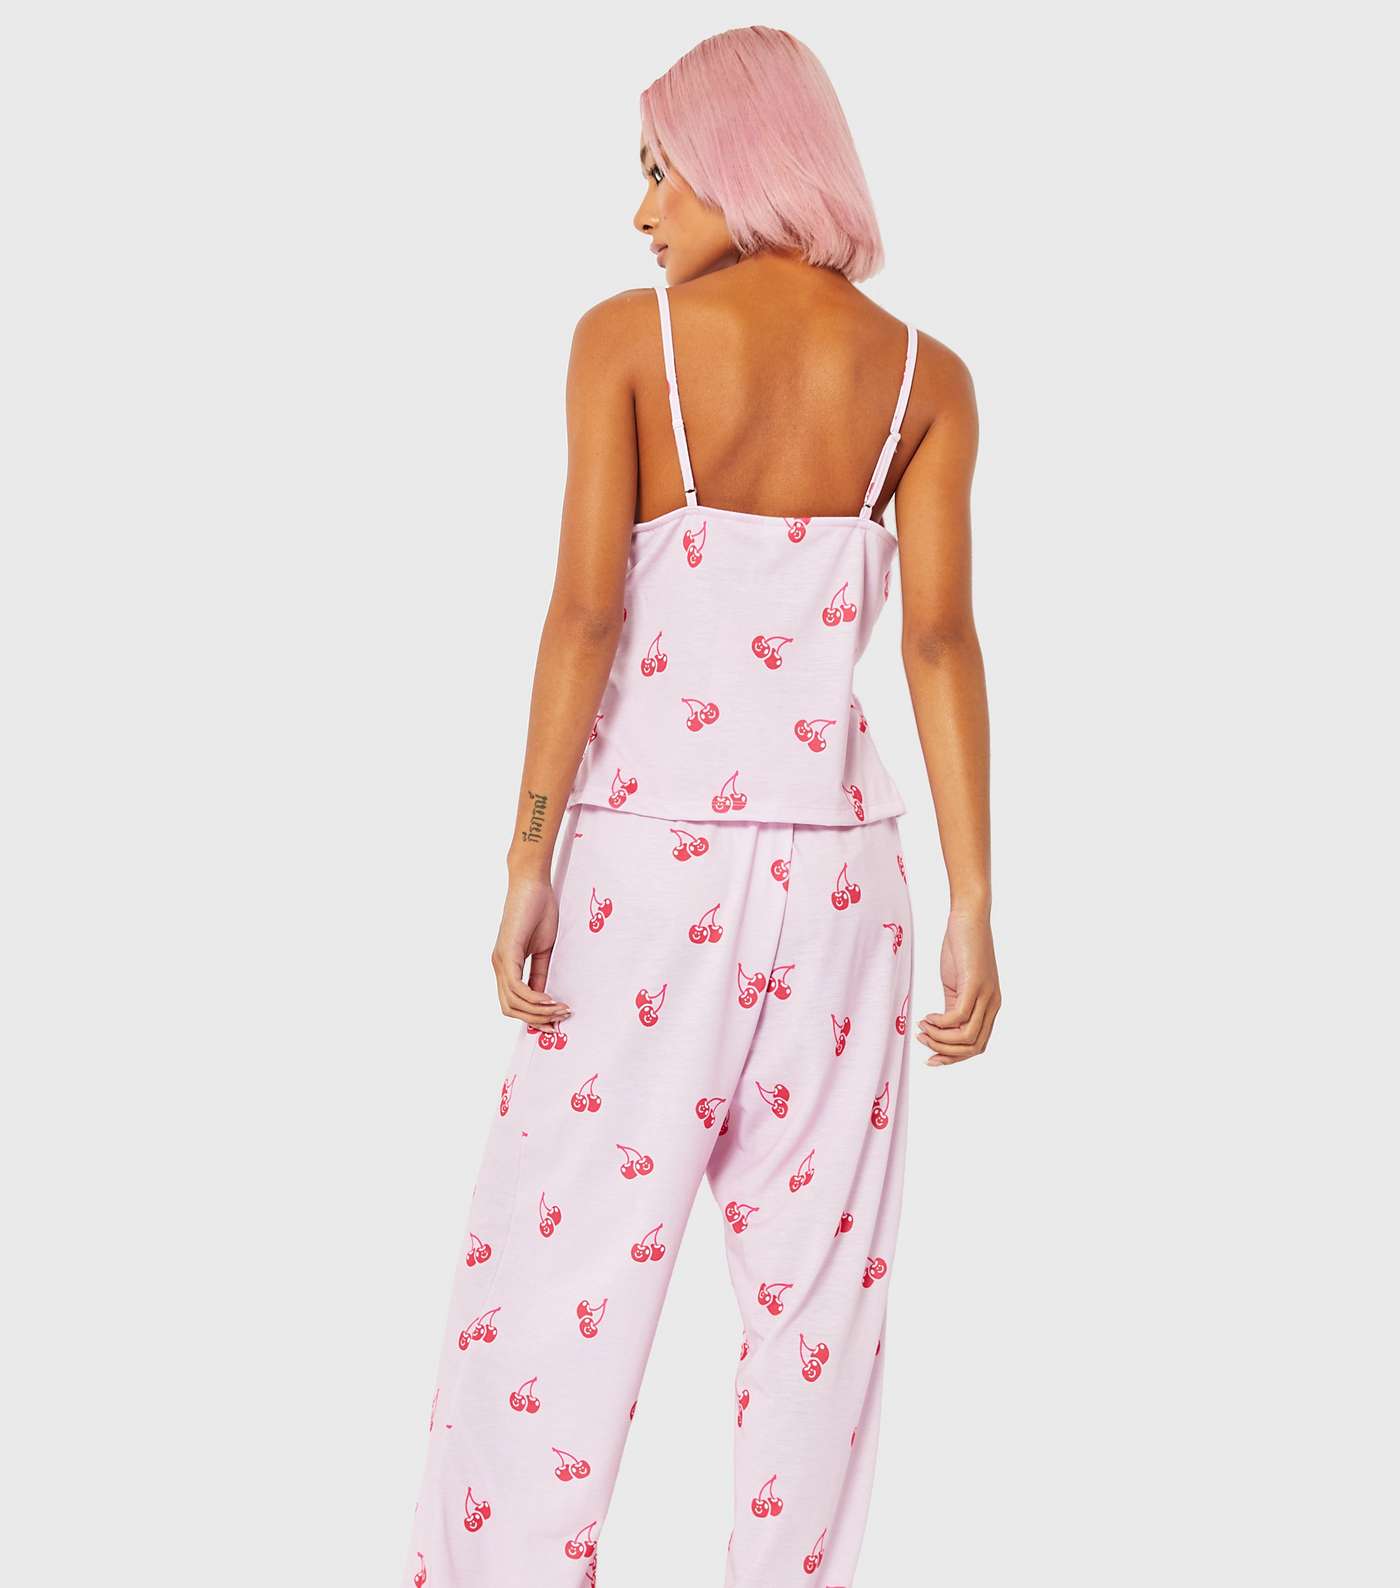 Skinnydip Pink Lace Trim Pyjama Set with Cherry Print Image 6